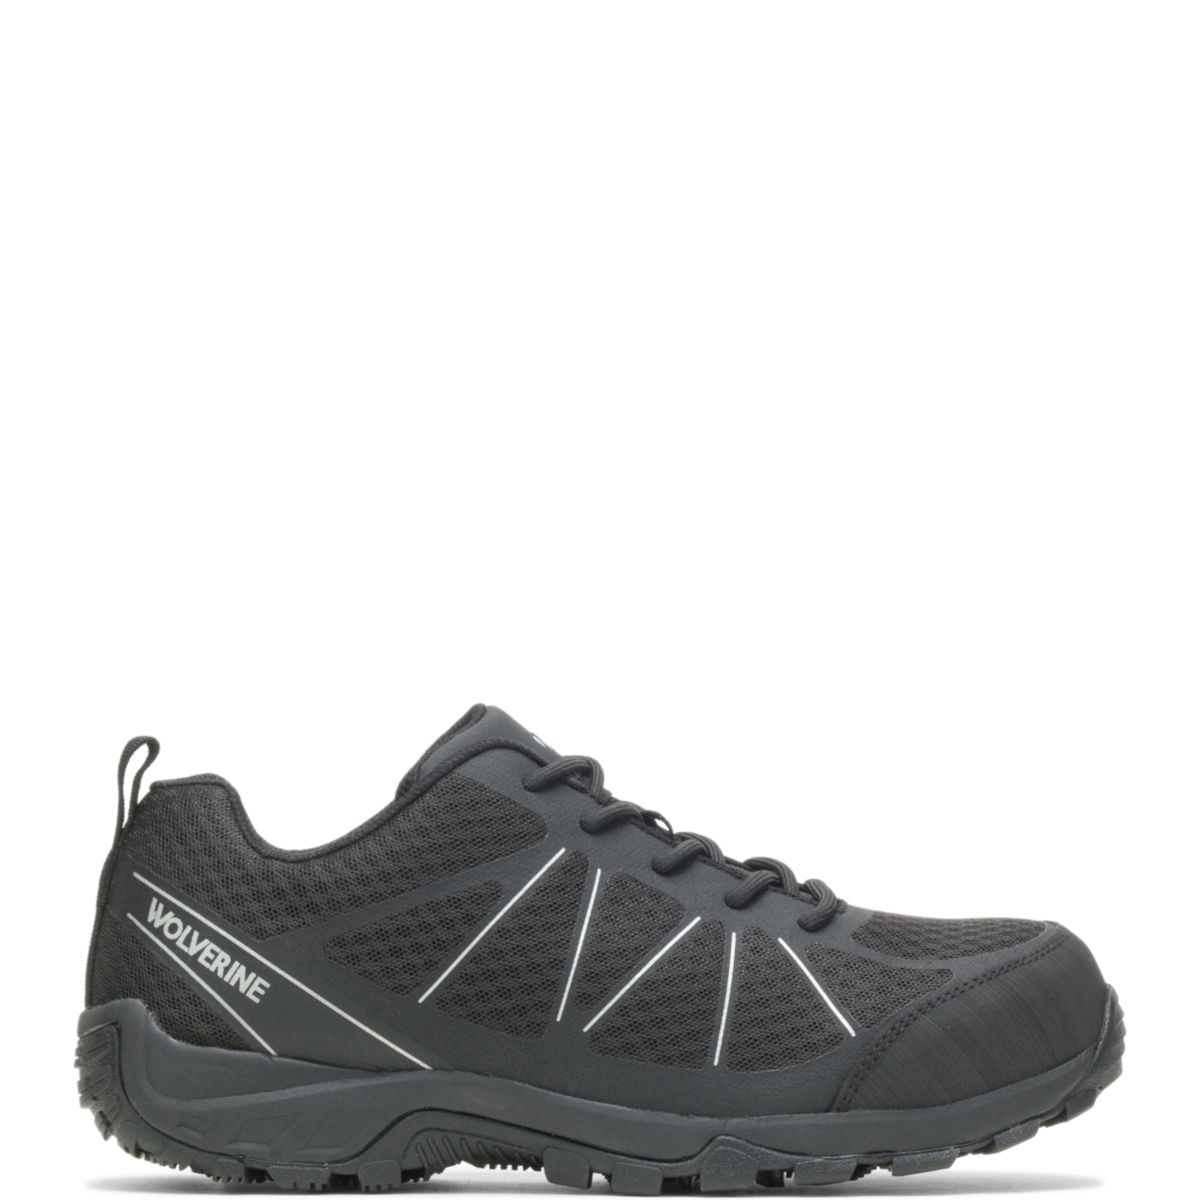 WOLVERINE Men's Amherst II CarbonMAXÂ® Composite Toe Work Shoe Black - W201147 BLACK - BLACK, 13 X-Wide